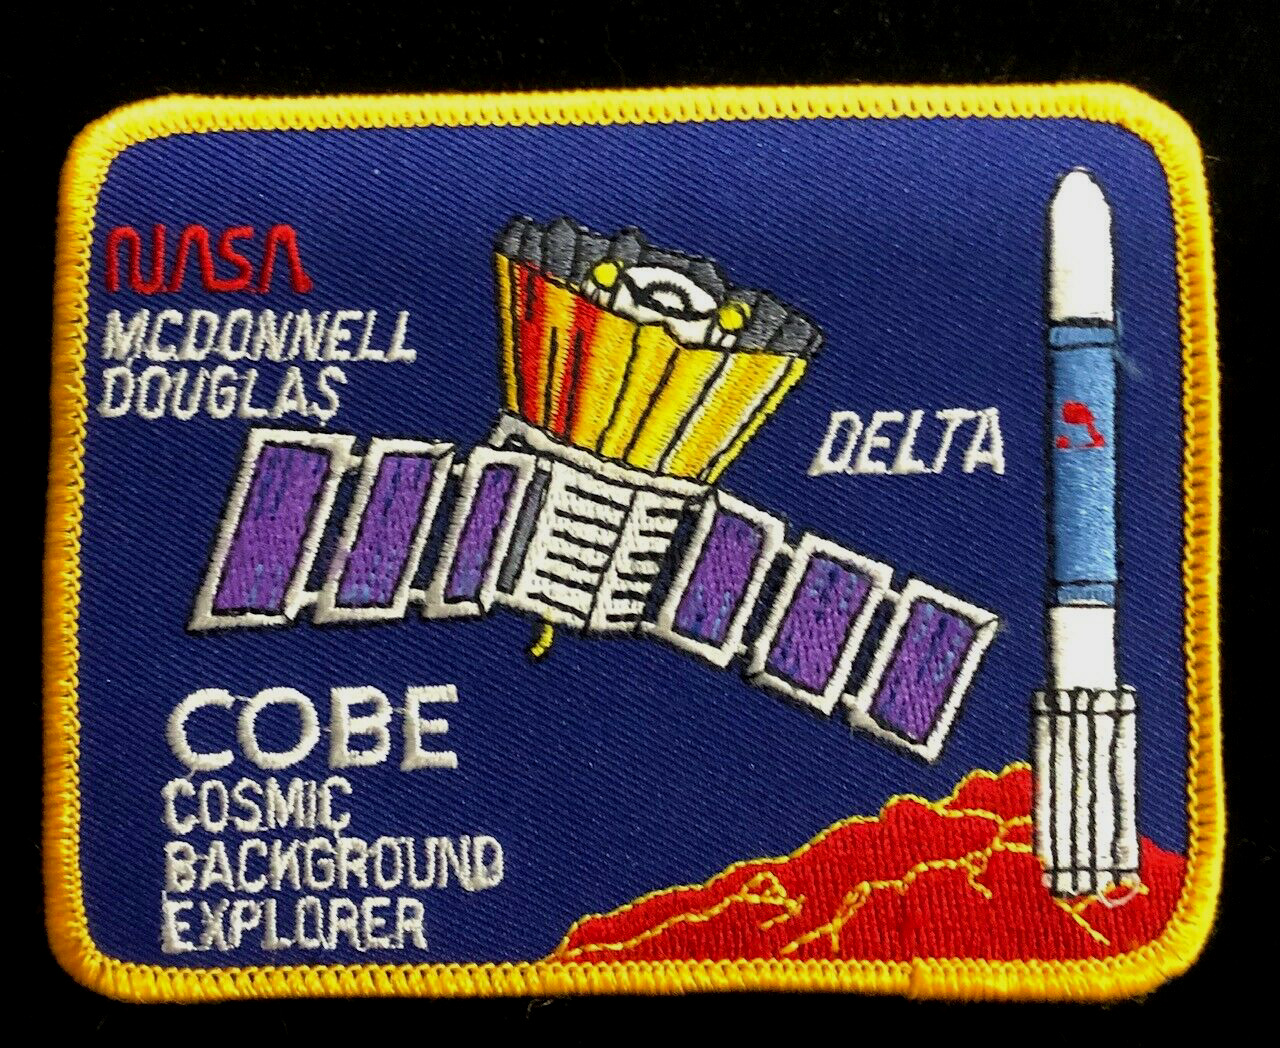  MCDONNELL DOUGLAS / DELTA COBE COSMIC BACKGROUND EXPLORER PROGRAM NASA PATCH